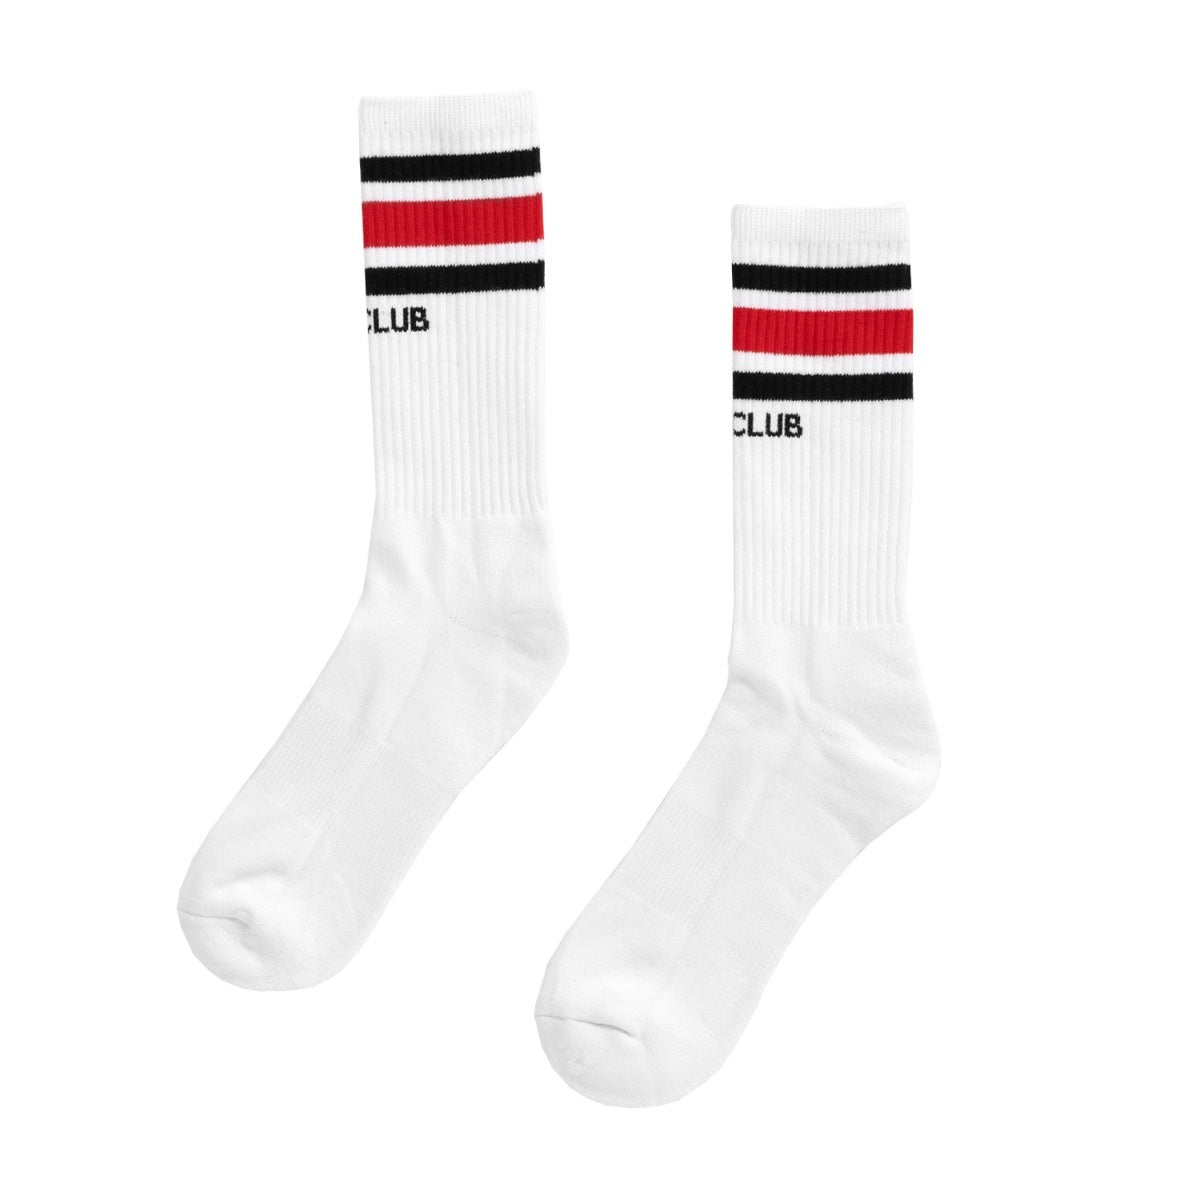 Pro Club Stripe Crew Sock - White/Red/Black (Size 9-13)